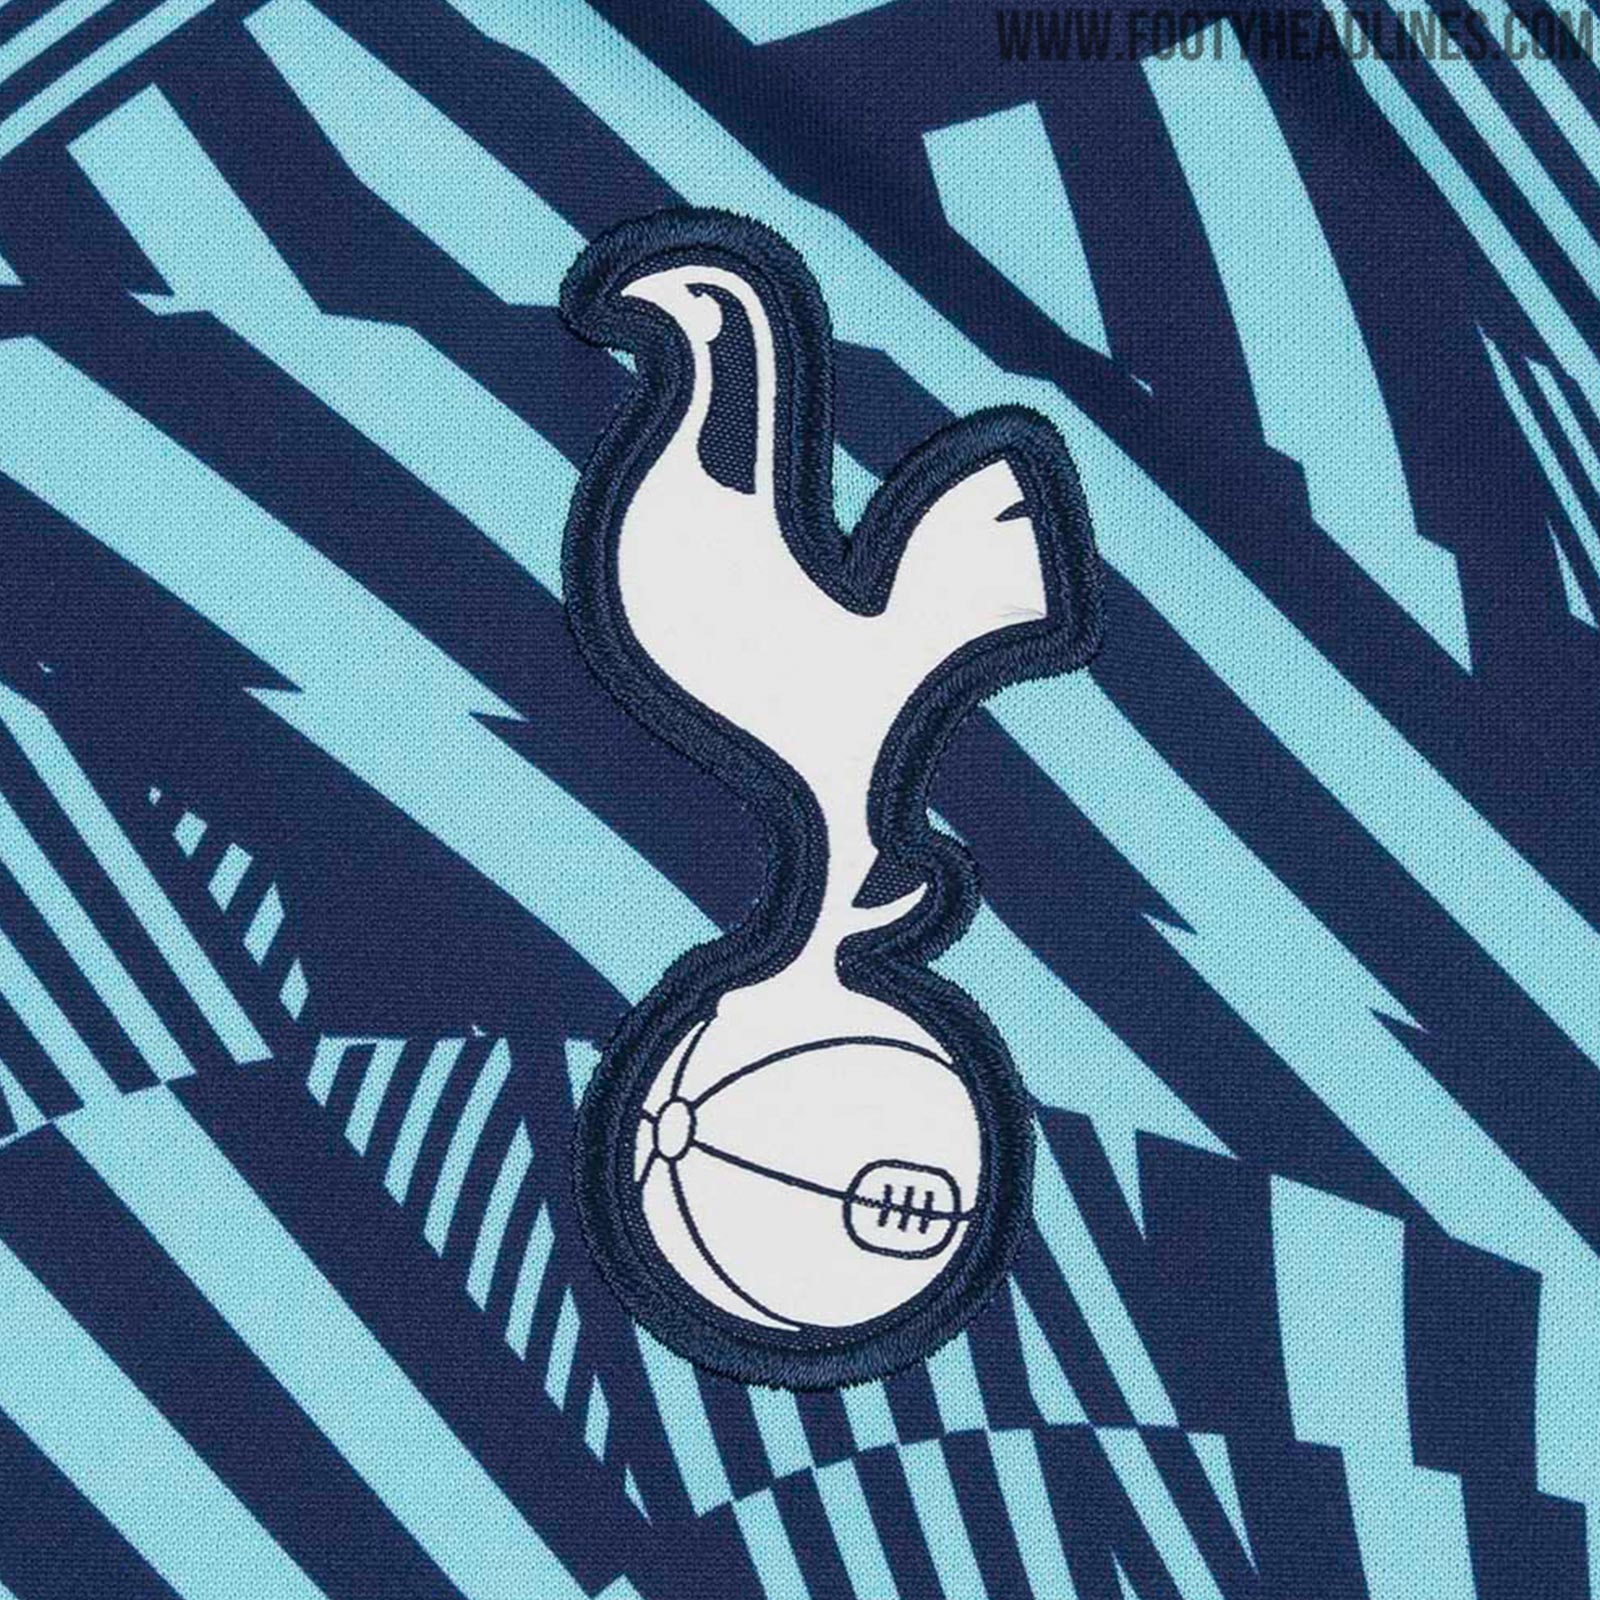 Outstanding Tottenham 18-19 Pre-Match Shirt Released - Footy Headlines